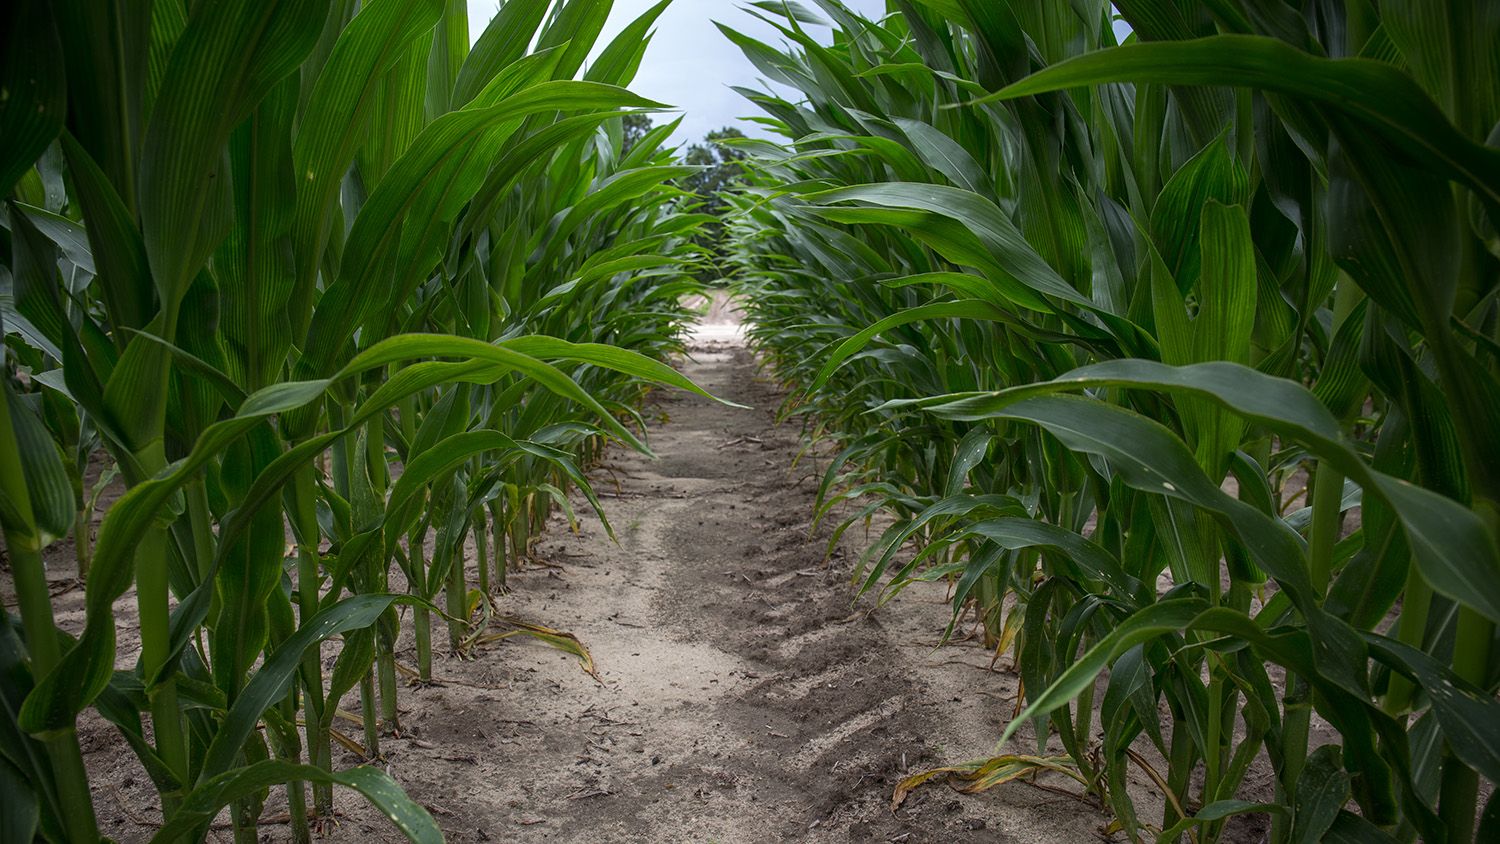 Corn stalks at the Peanut Belt Research Station